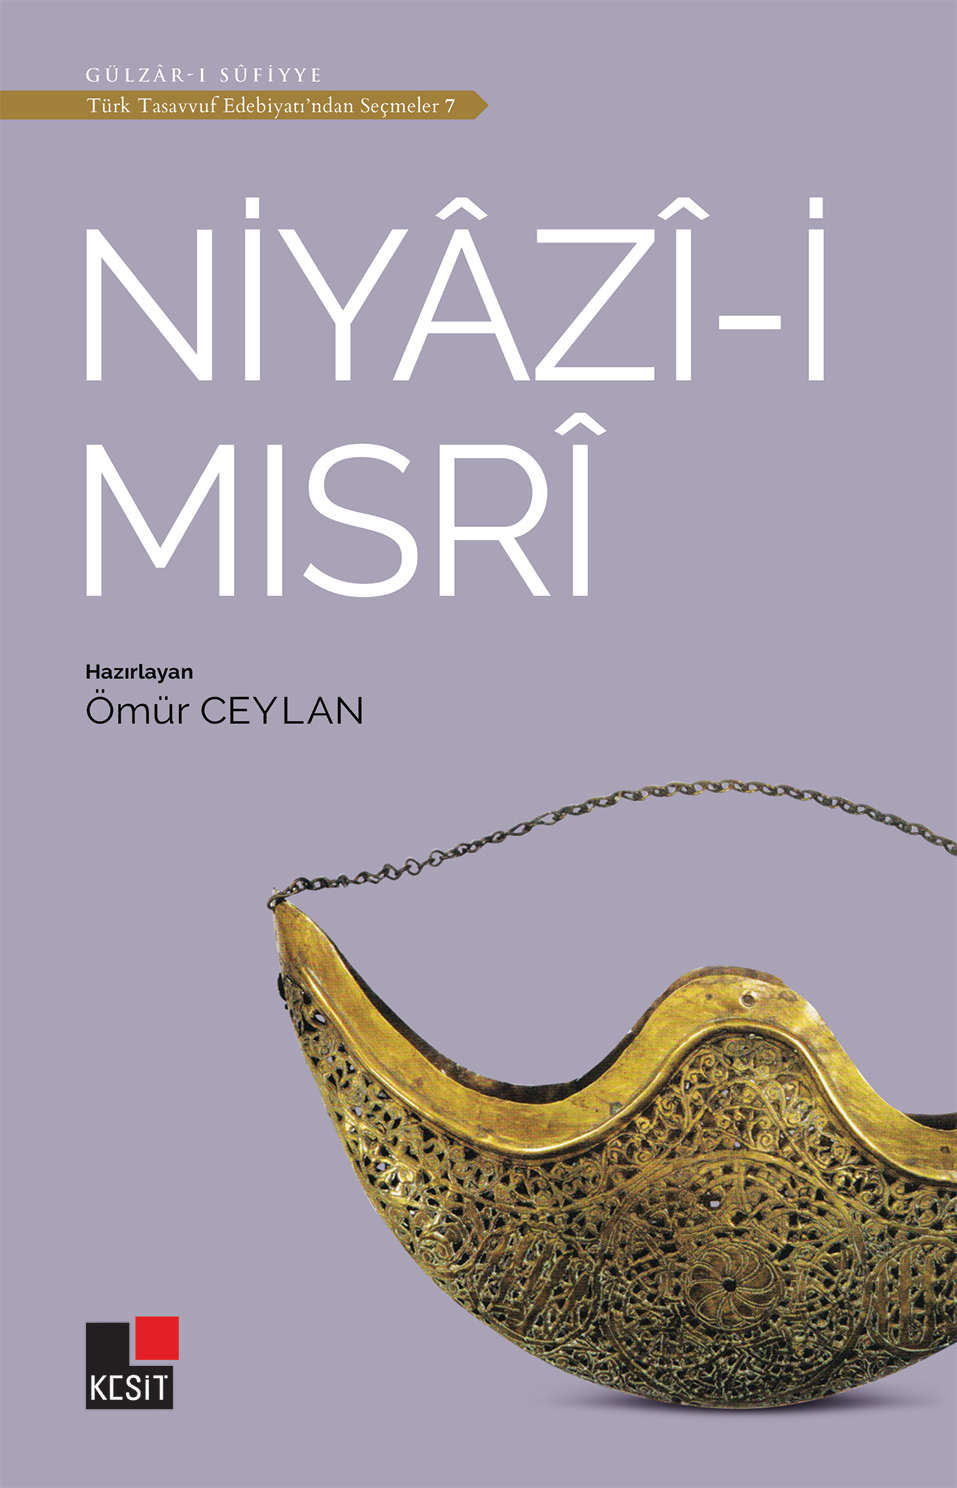 Niyâzî-i Mısrî / Türk tasavvuf edebiyatından seçmeler 7